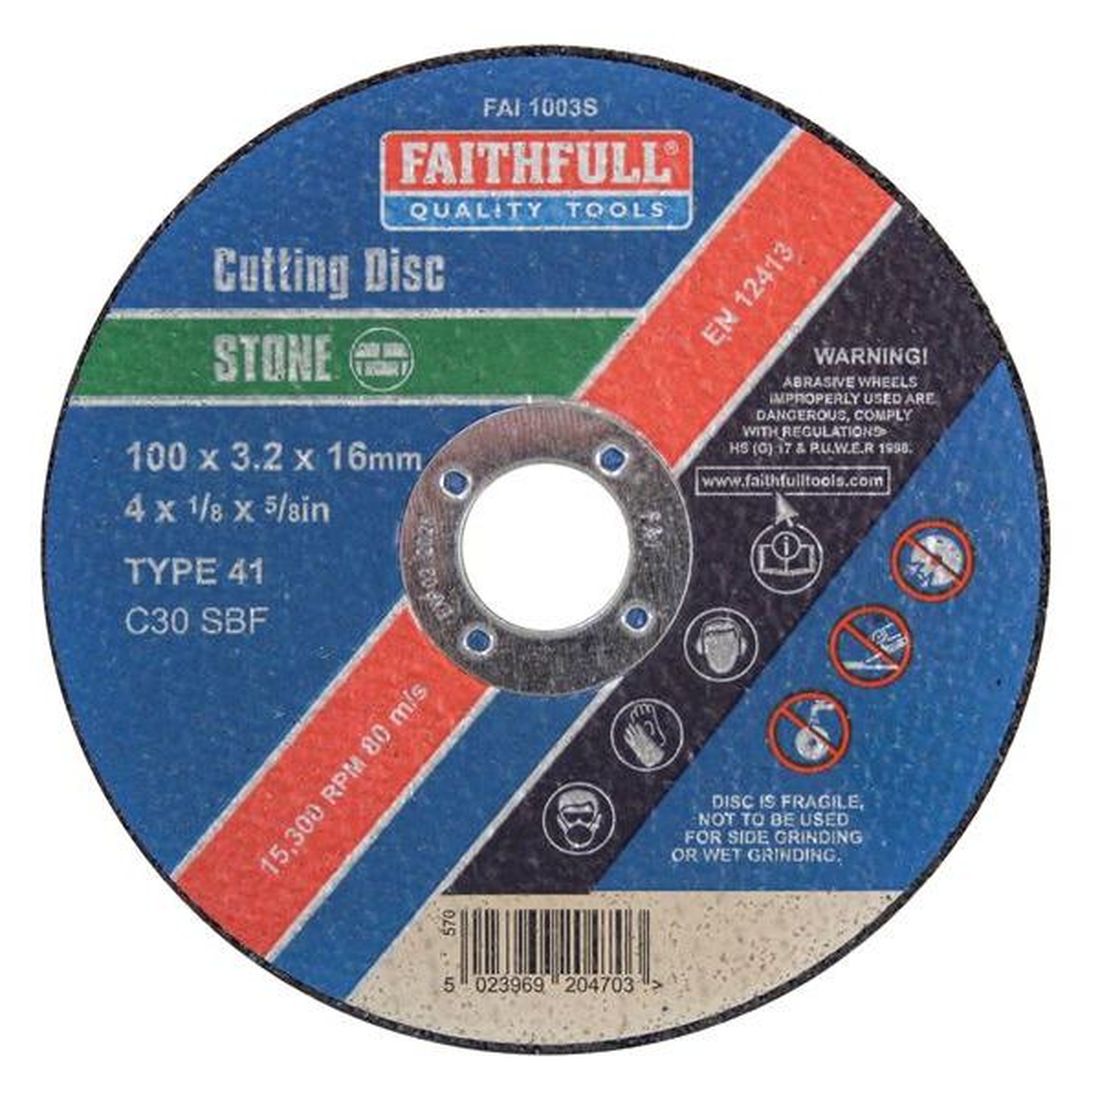 Faithfull Stone Cut Off Disc 100 x 3.2 x 16mm                                             